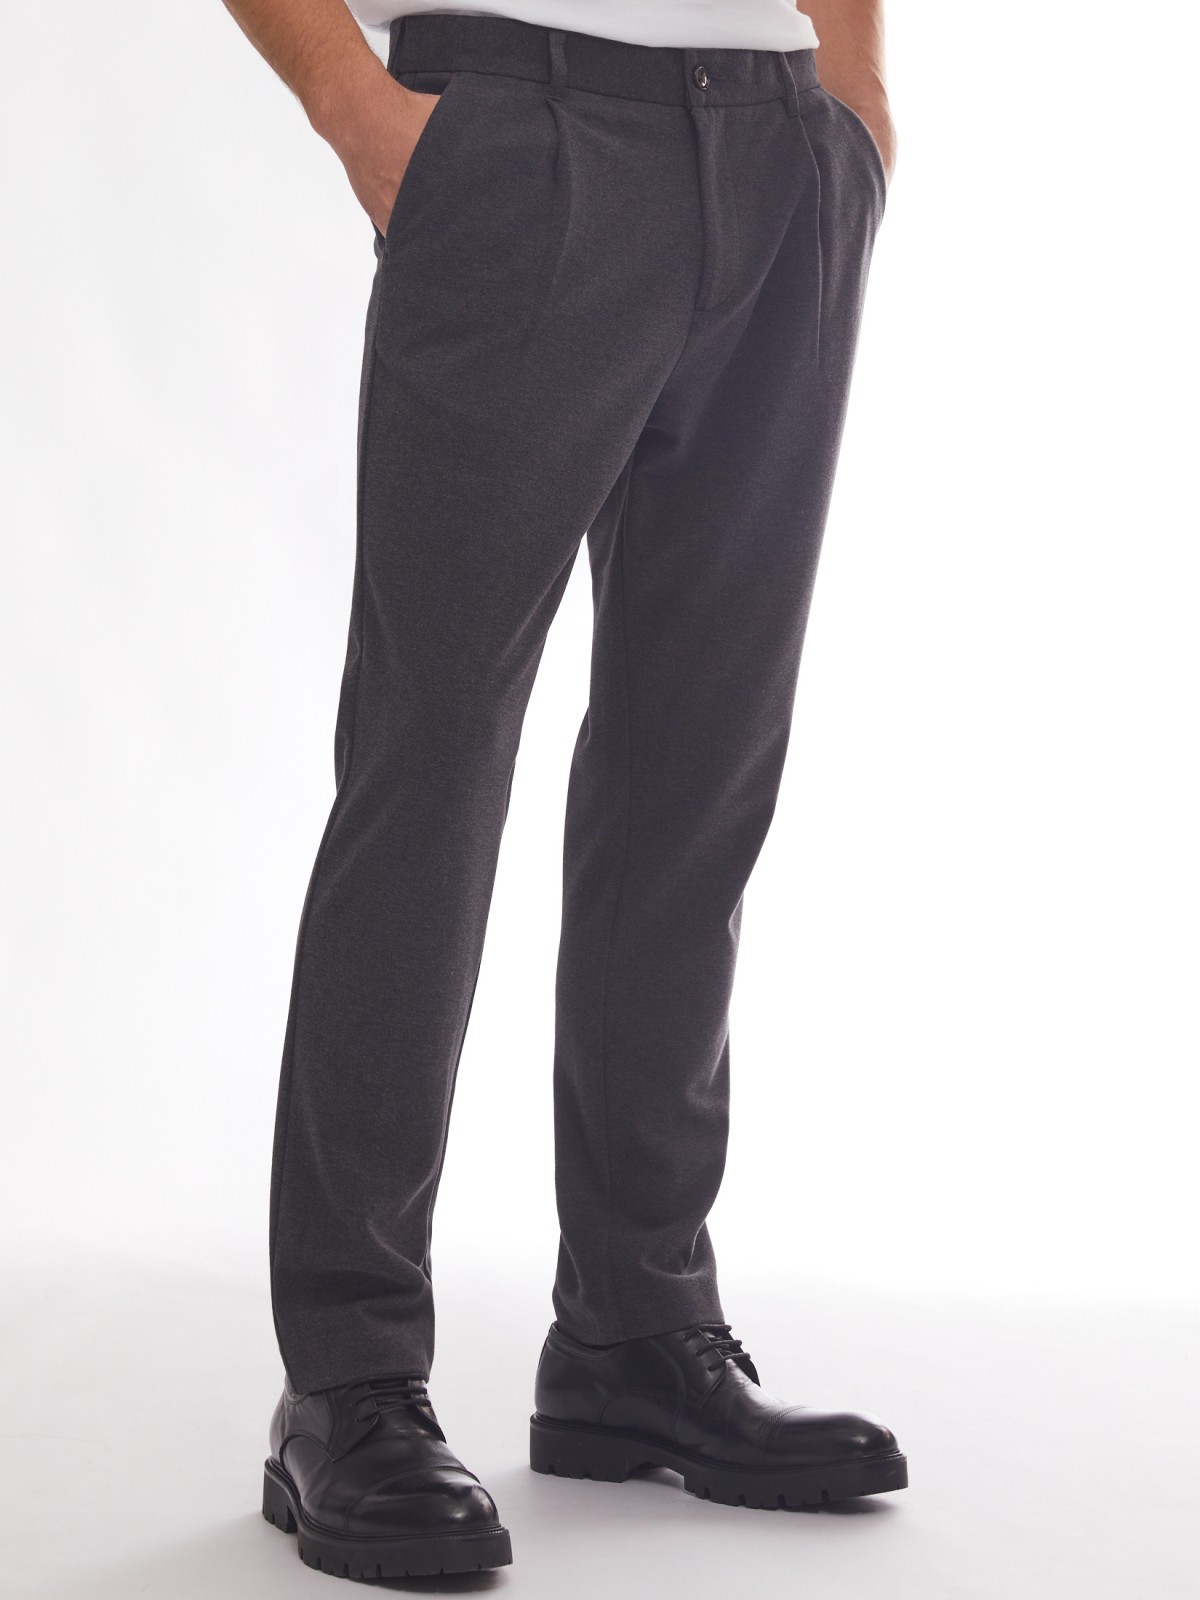 Офисные брюки силуэта Tapered zolla 014117366013, цвет темно-серый, размер 30 - фото 3